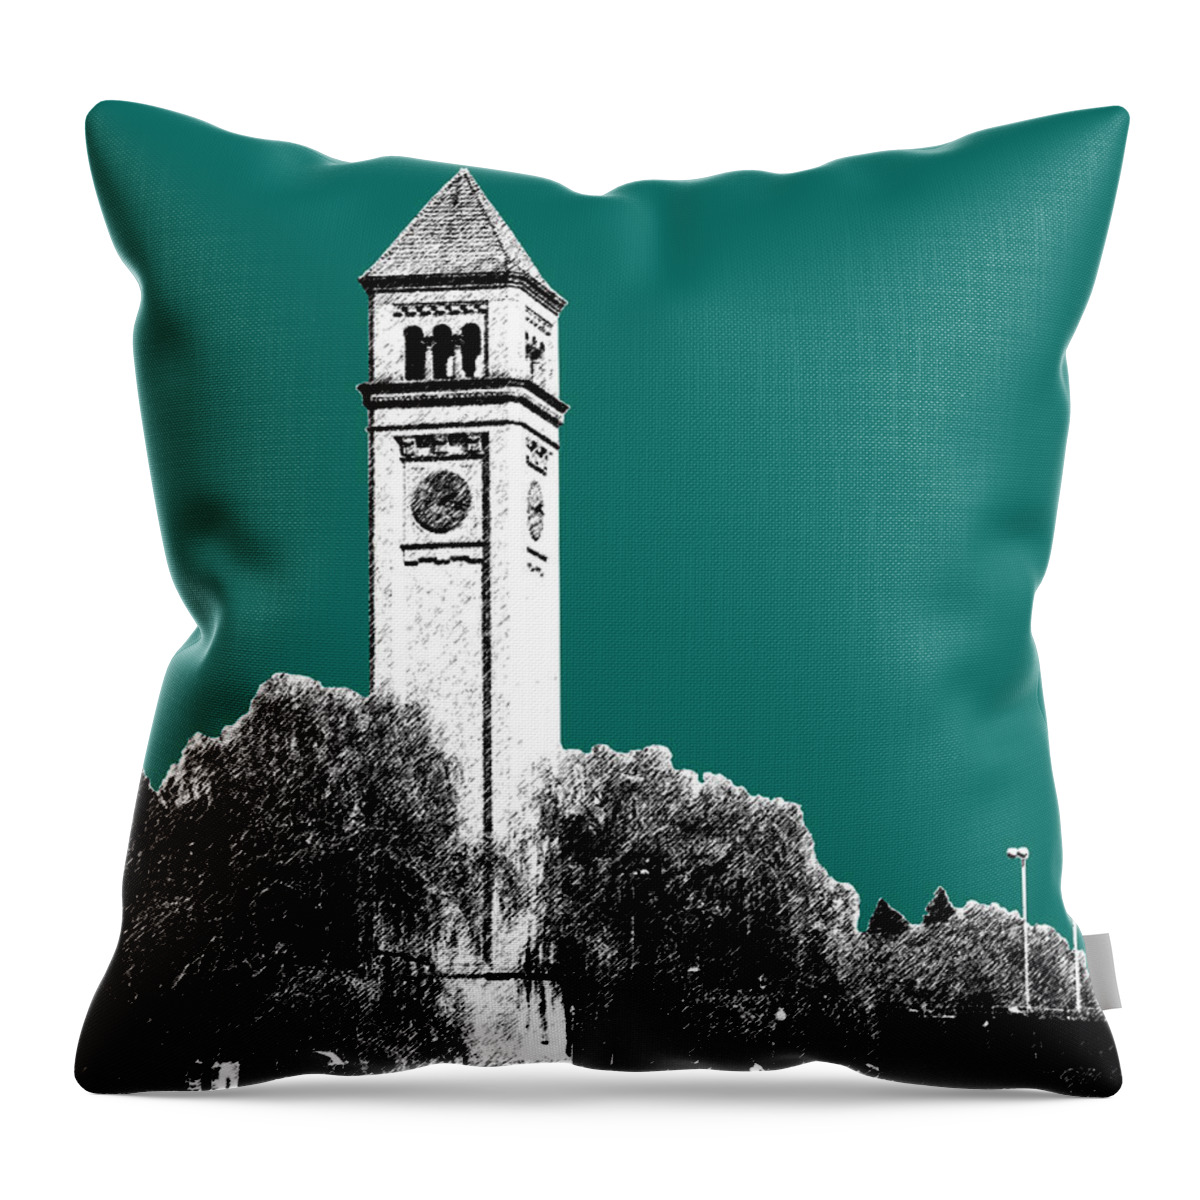 Architecture Throw Pillow featuring the digital art Spokane Skyline Clock Tower - Sea Green by DB Artist